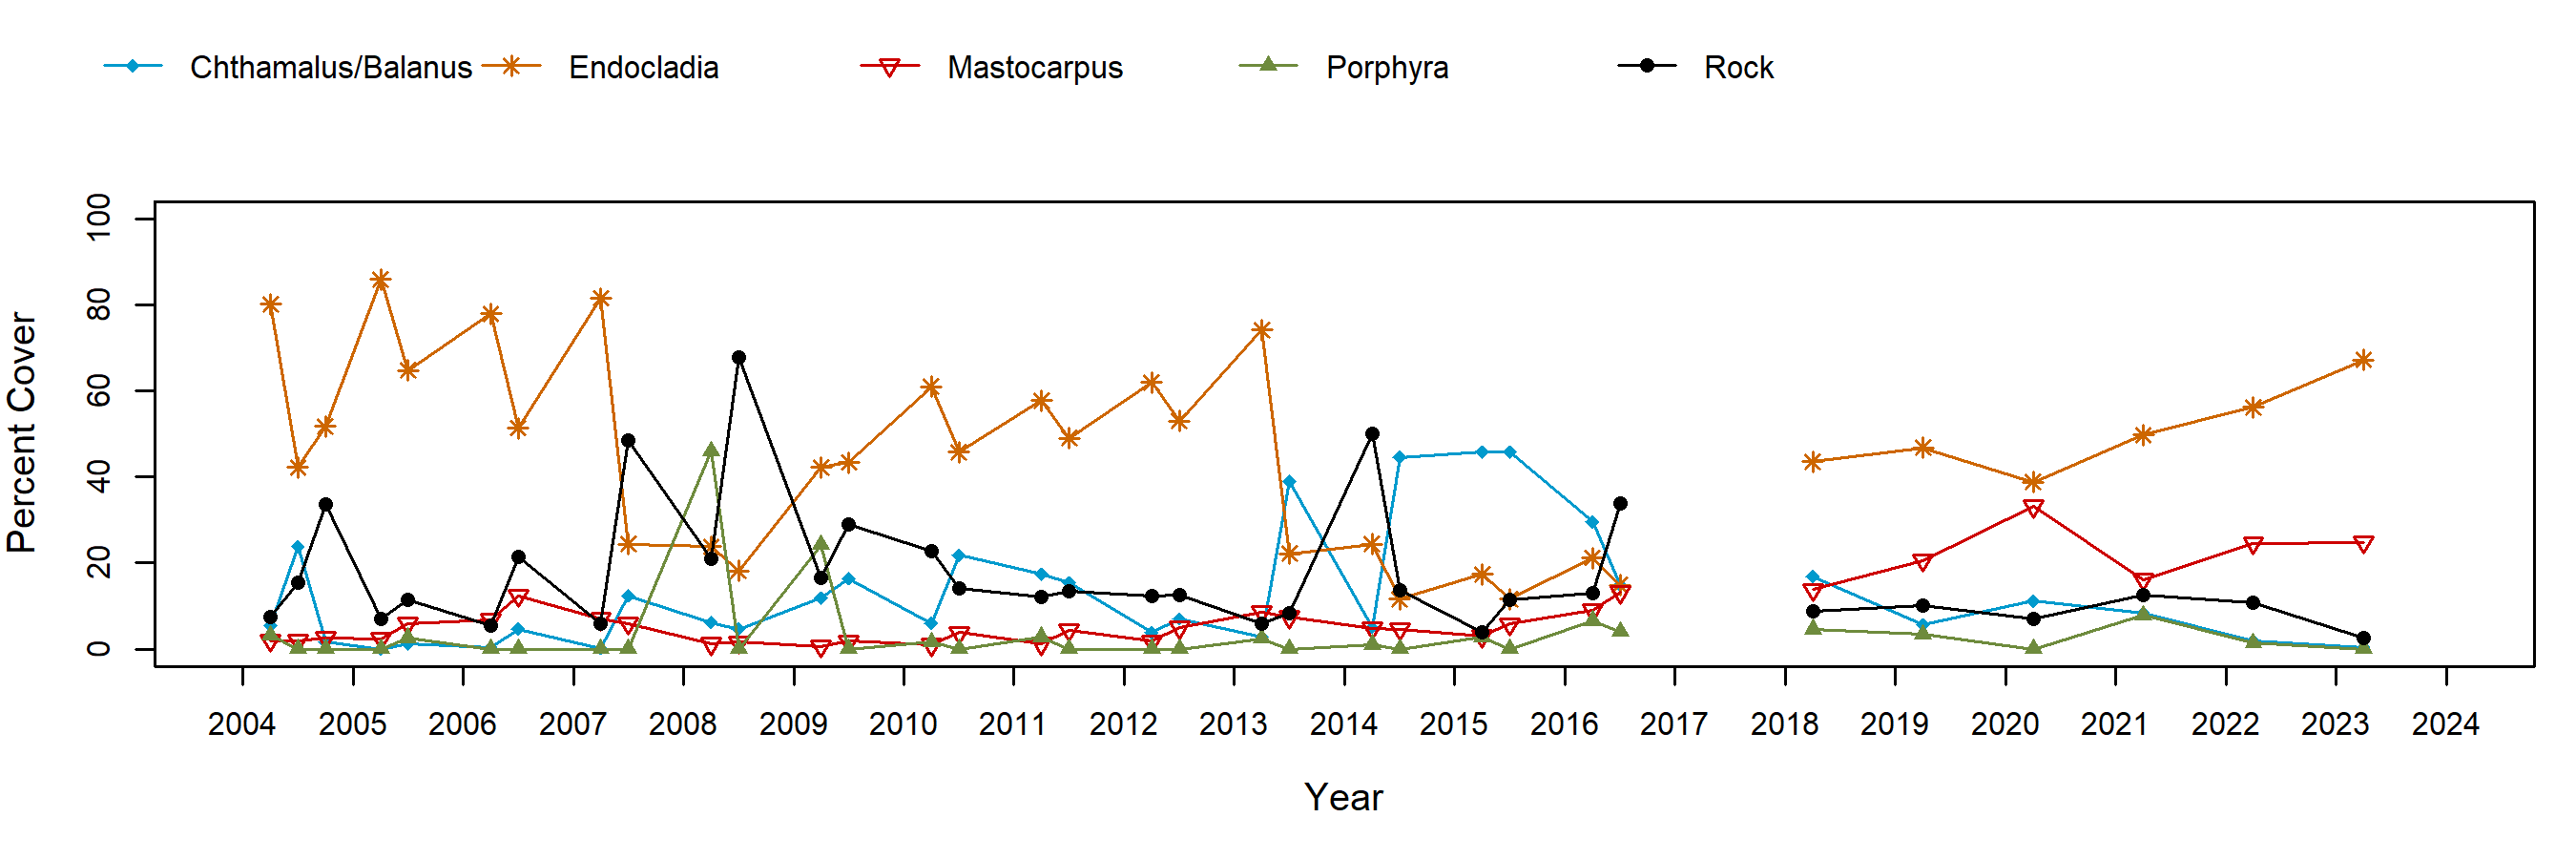 Enderts Endocladia trend plot